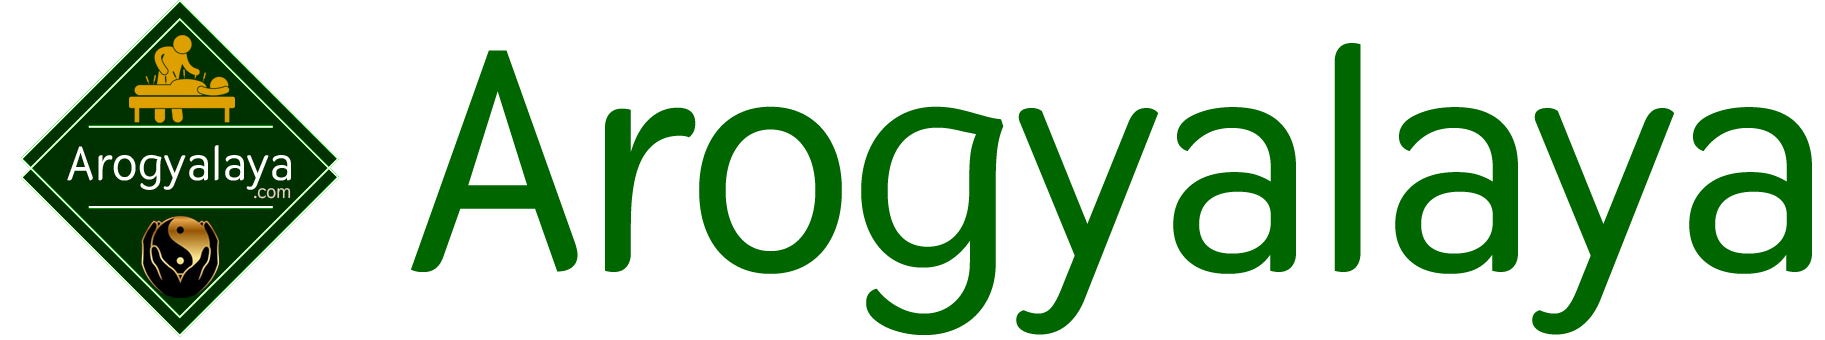 Arogyalaya Logo